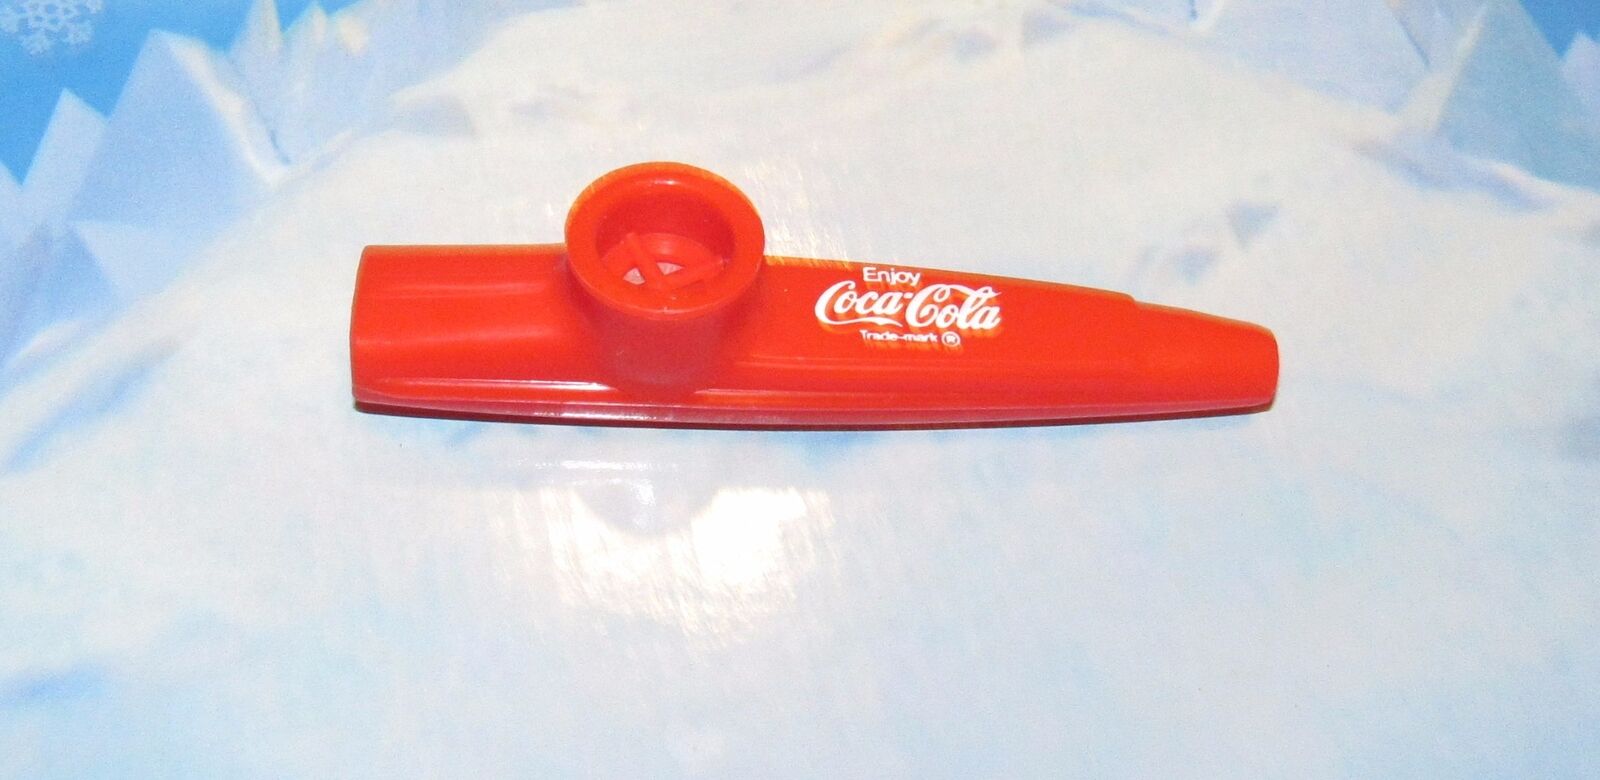 Coca-Cola Kazoo Advertising Coca-Cola Kazoo Musical Instrument